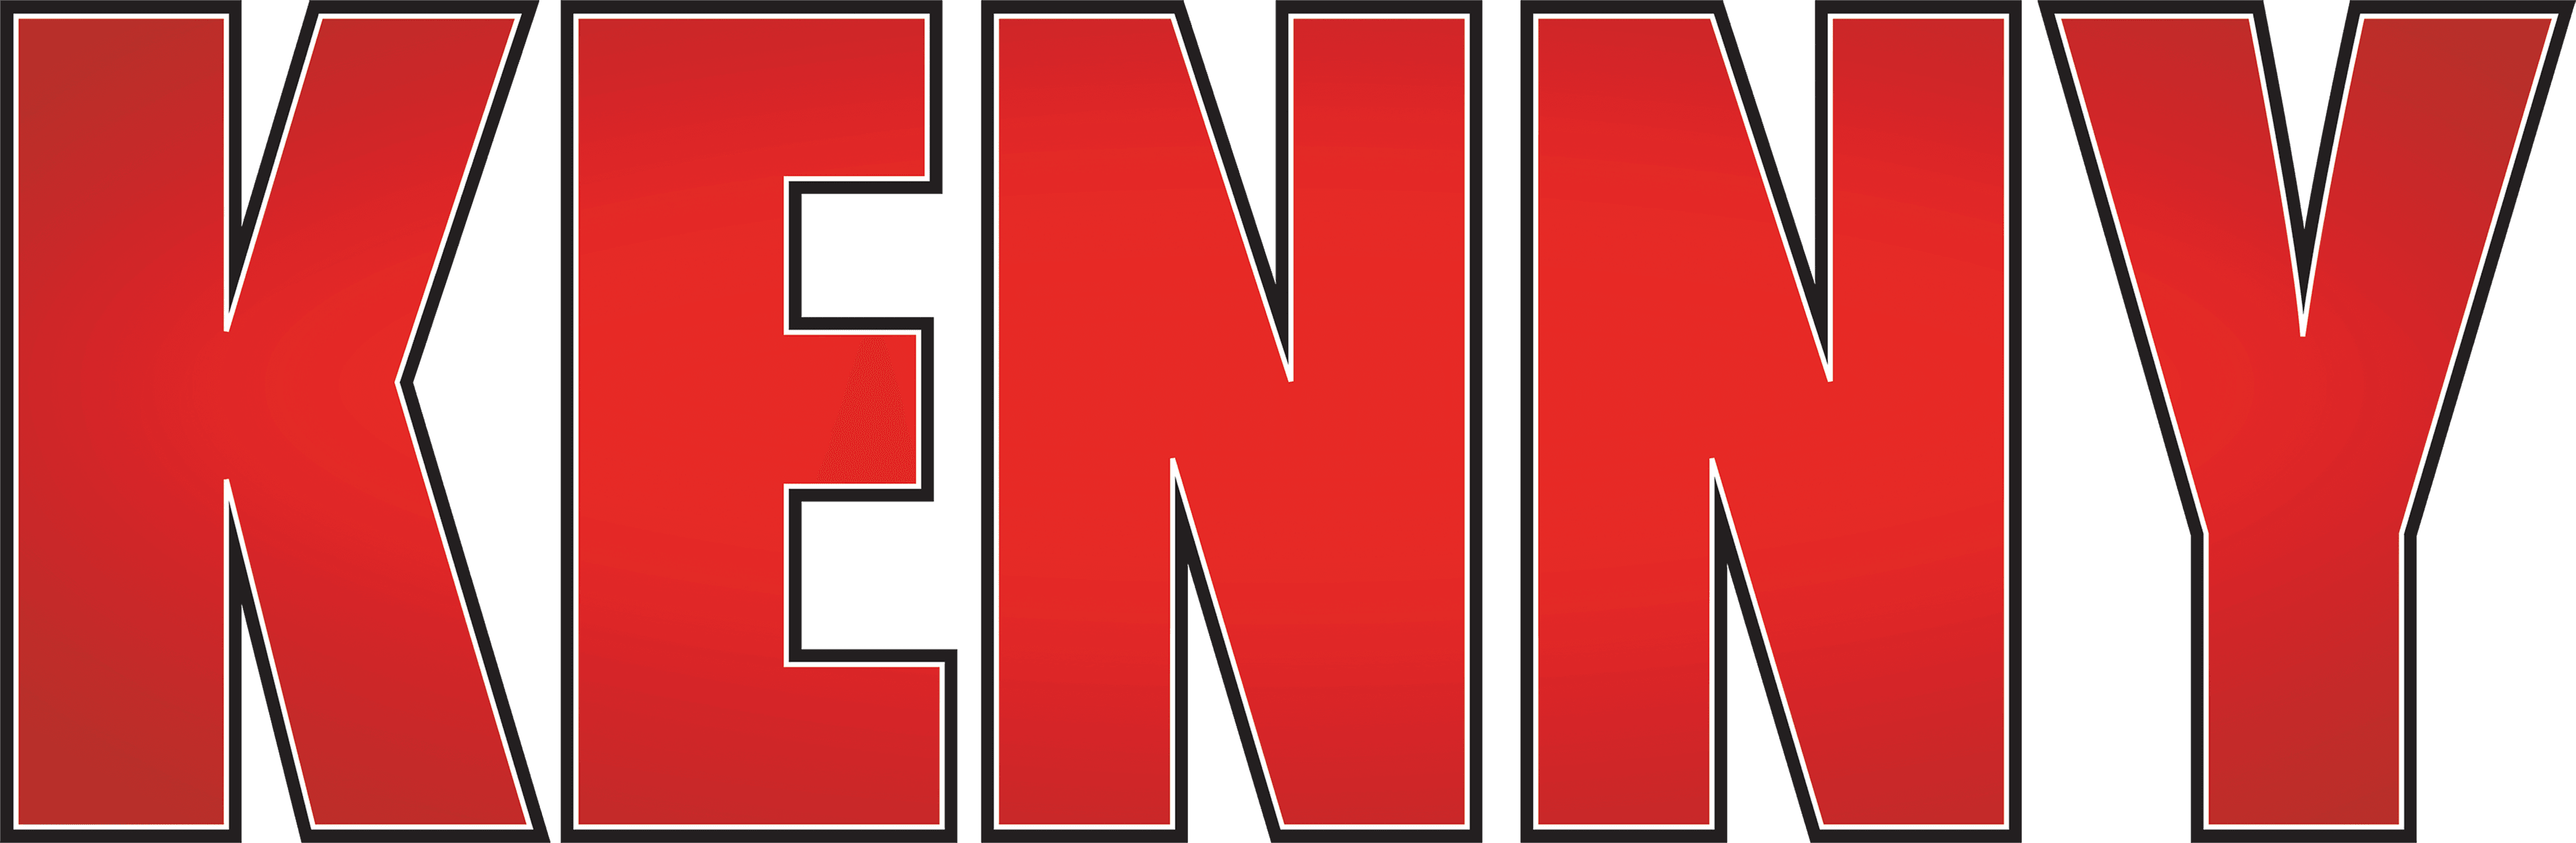 Kenny logo